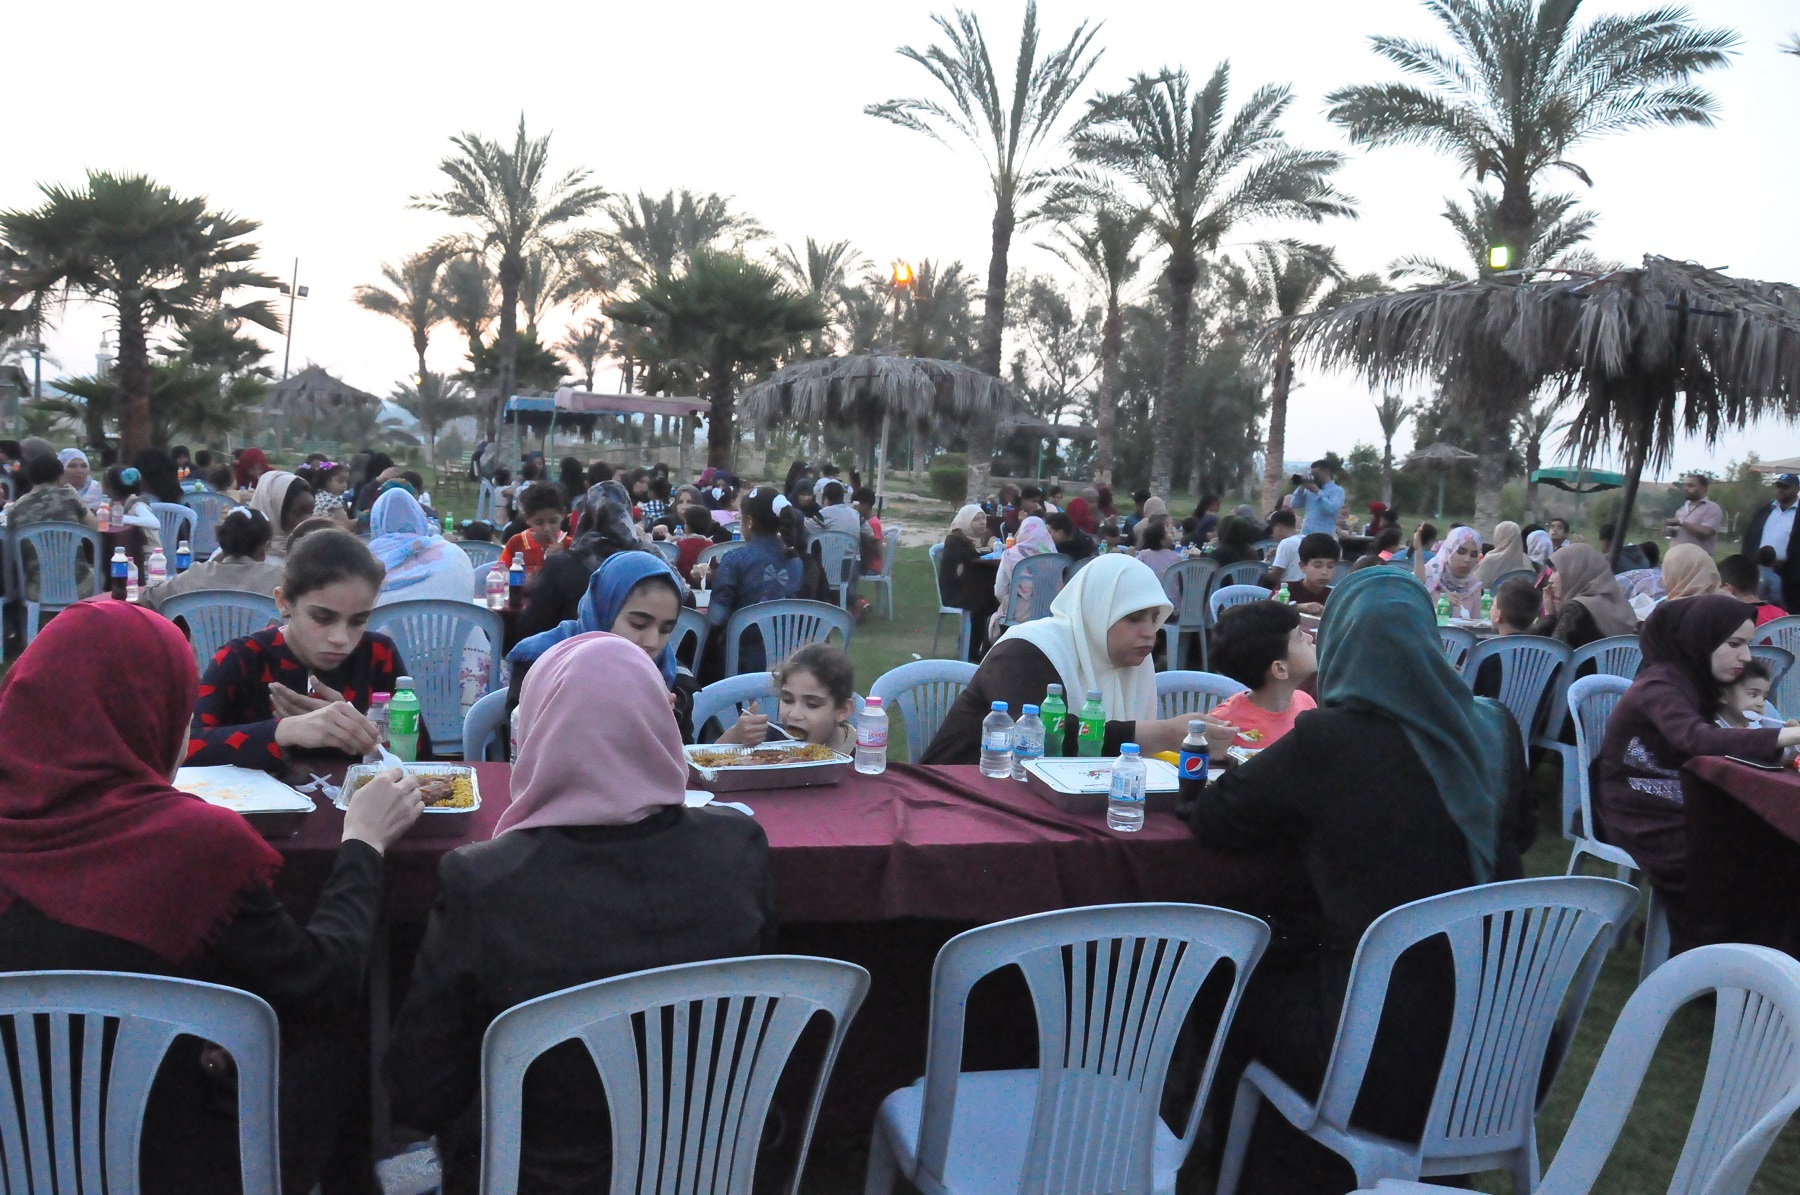 Group "Iftar" a gesture of social solidarity